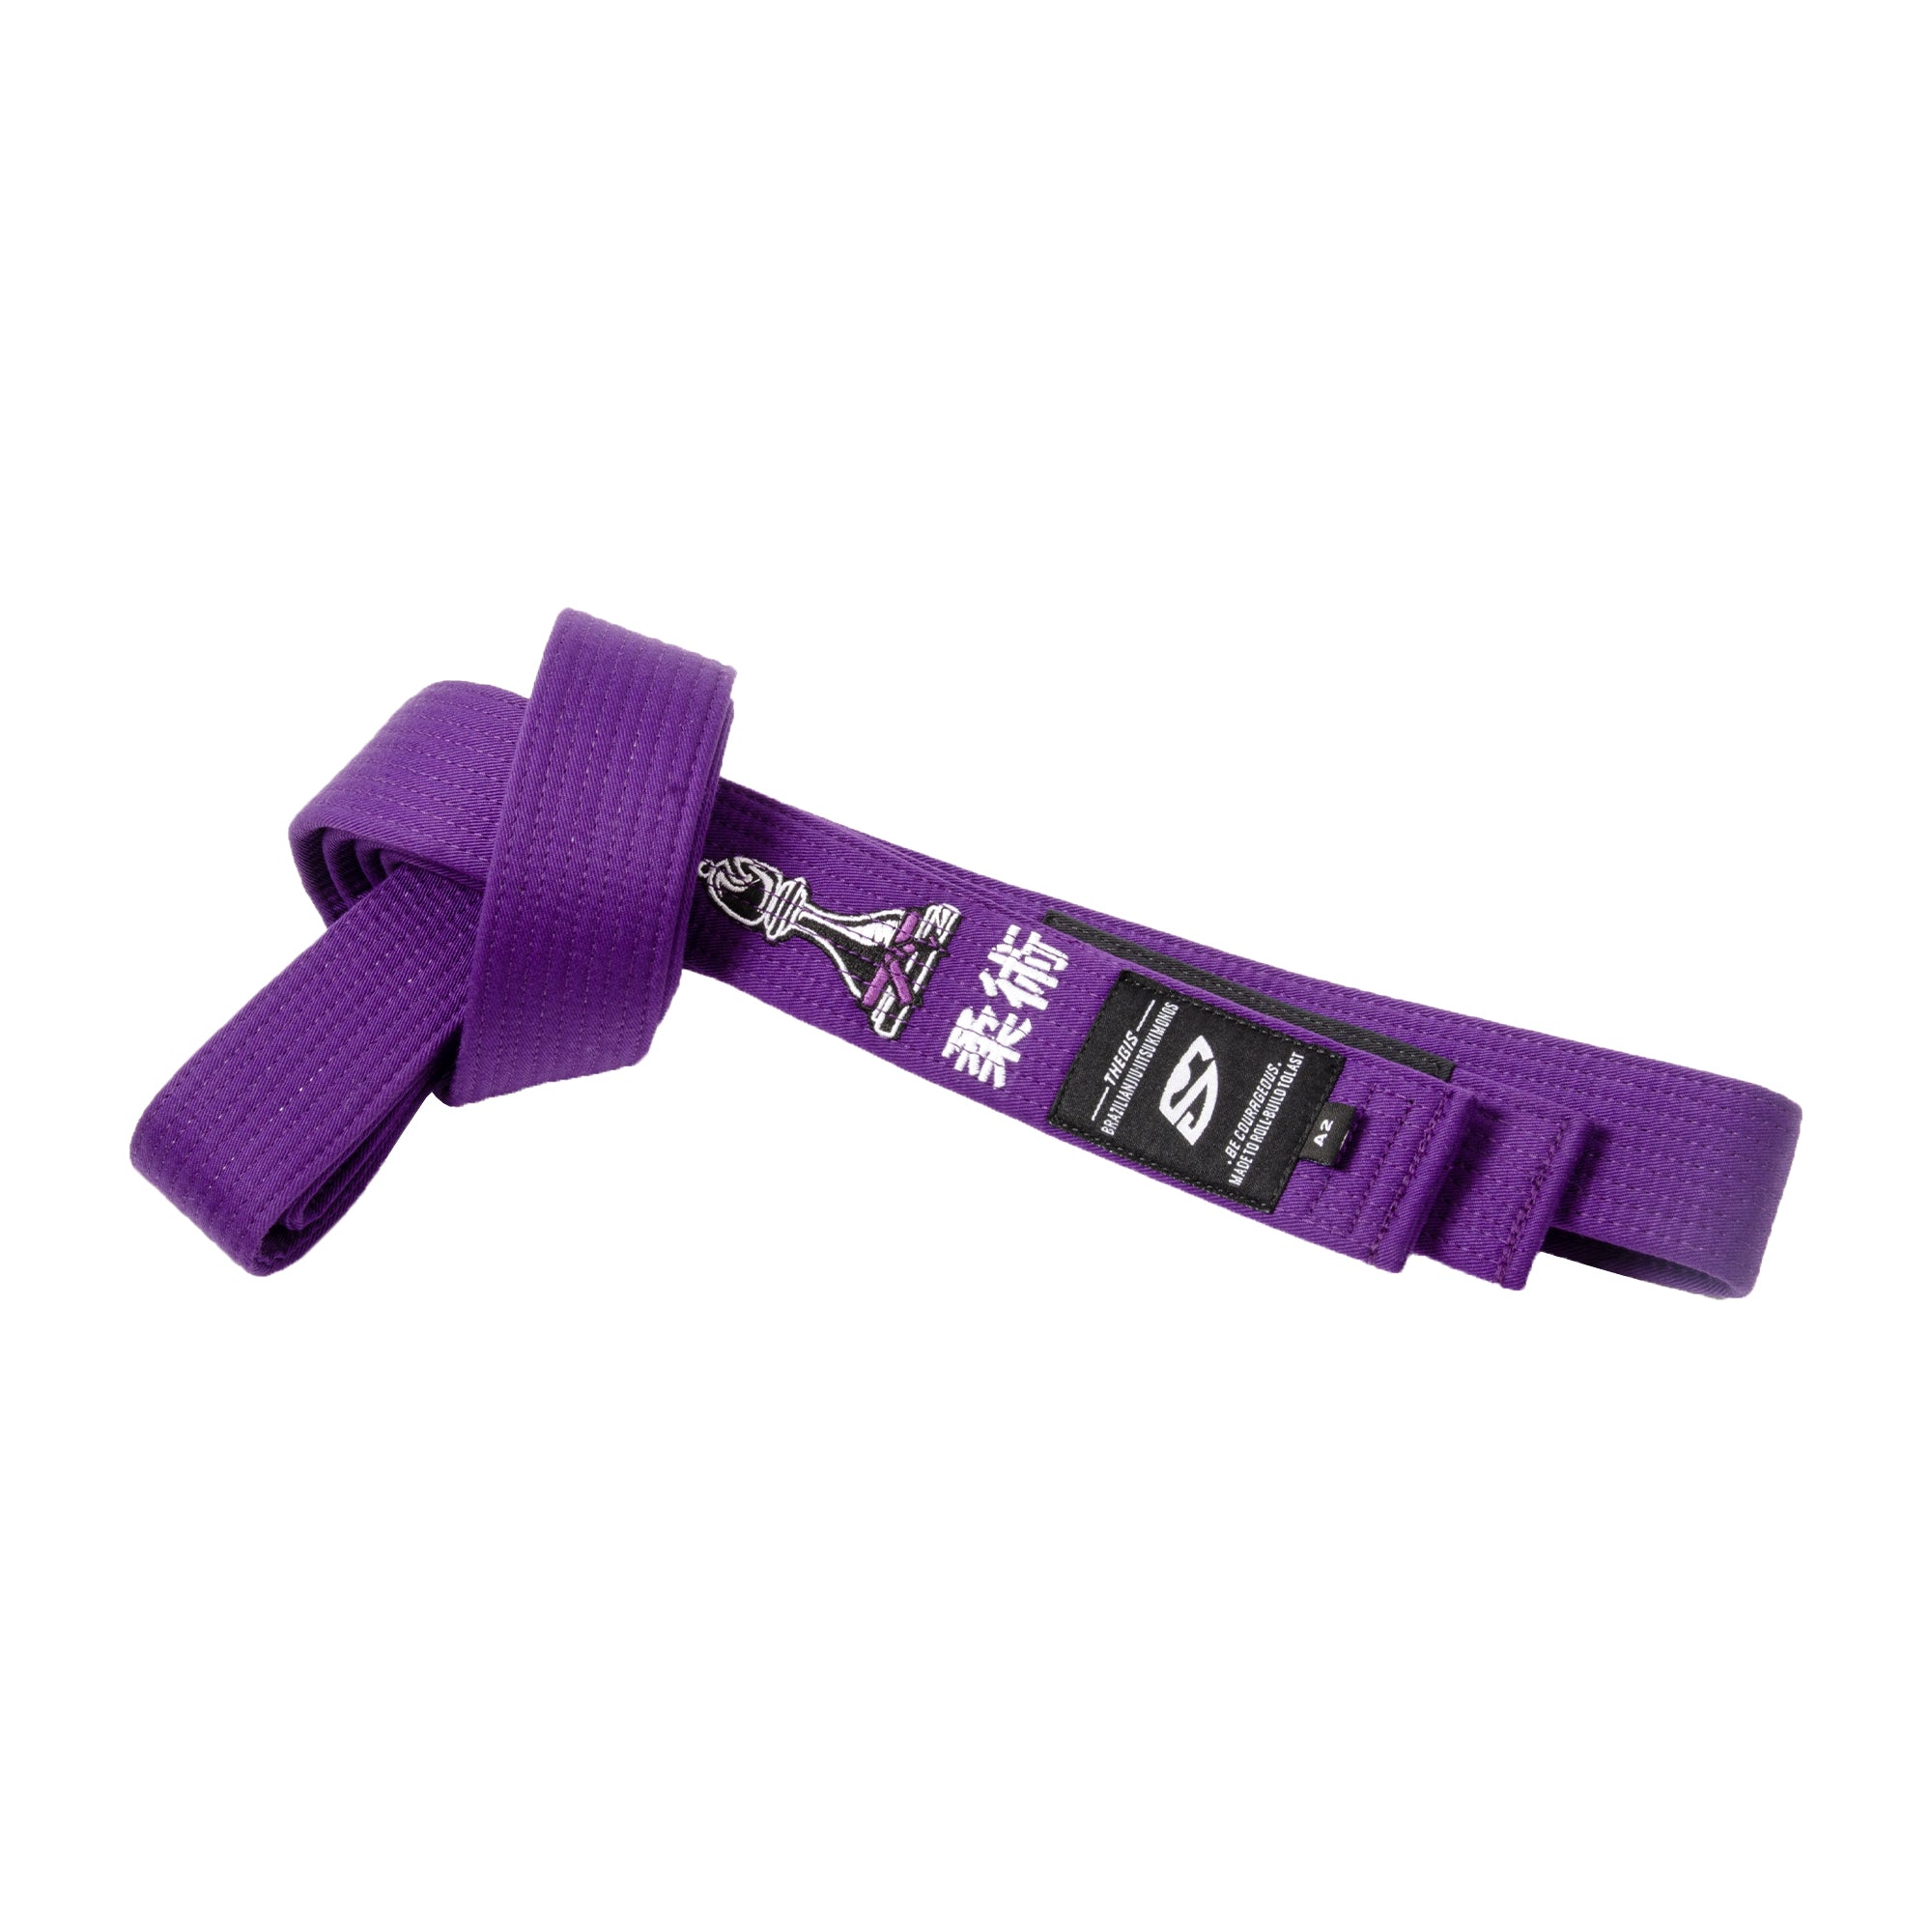 Premium Jiu-Jitsu Purple belt.